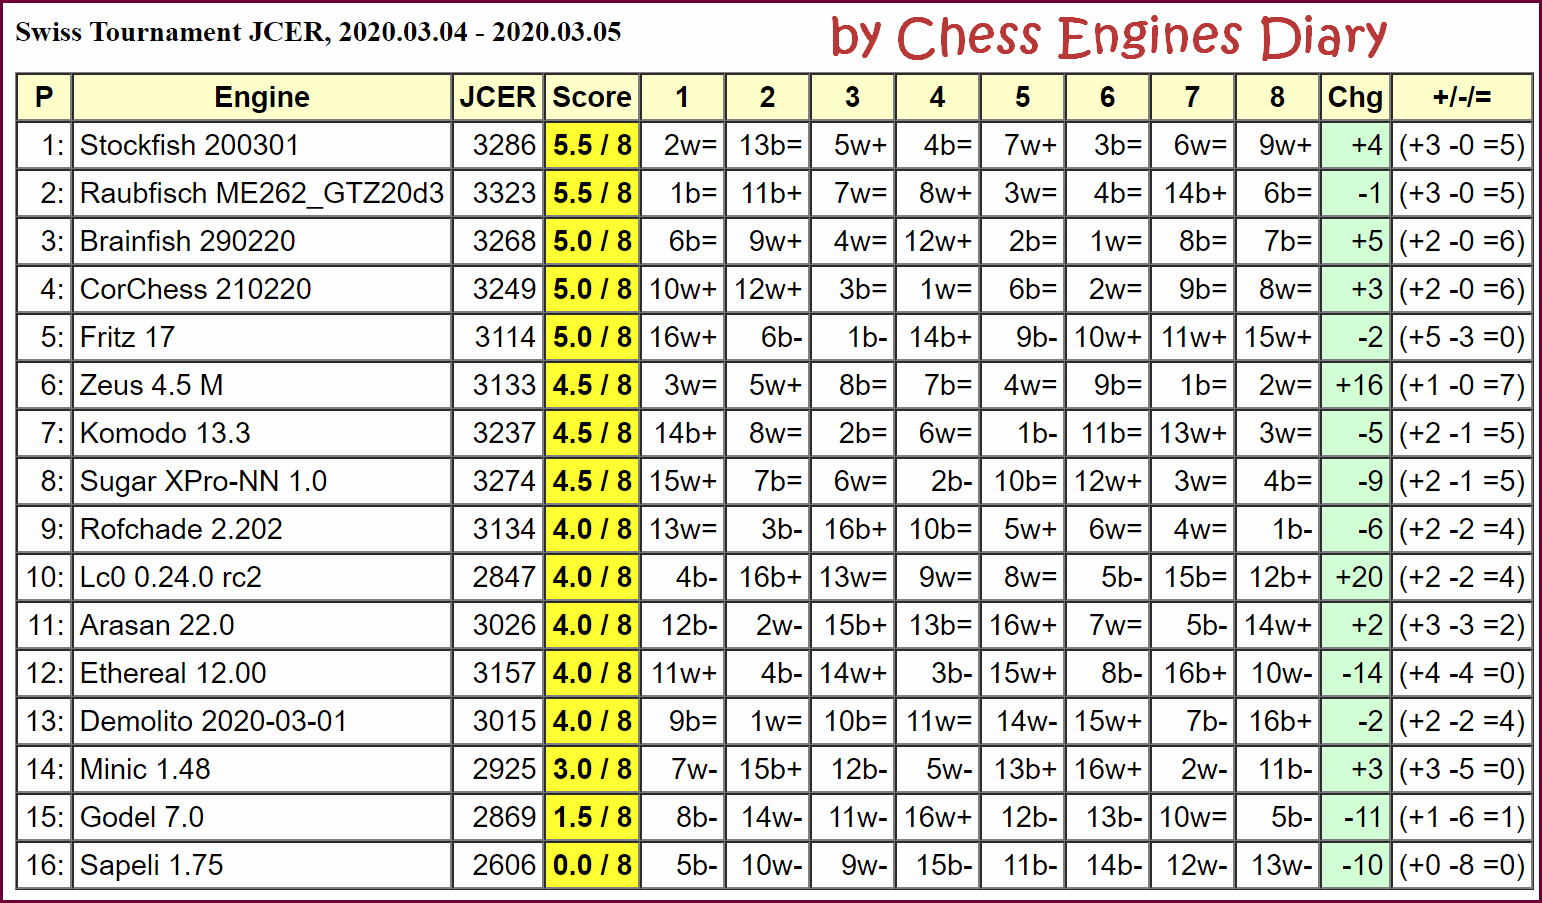 Stockfish 200301 wins Swiss Tournament JCER, 2020.03.04 - 2020.03.05